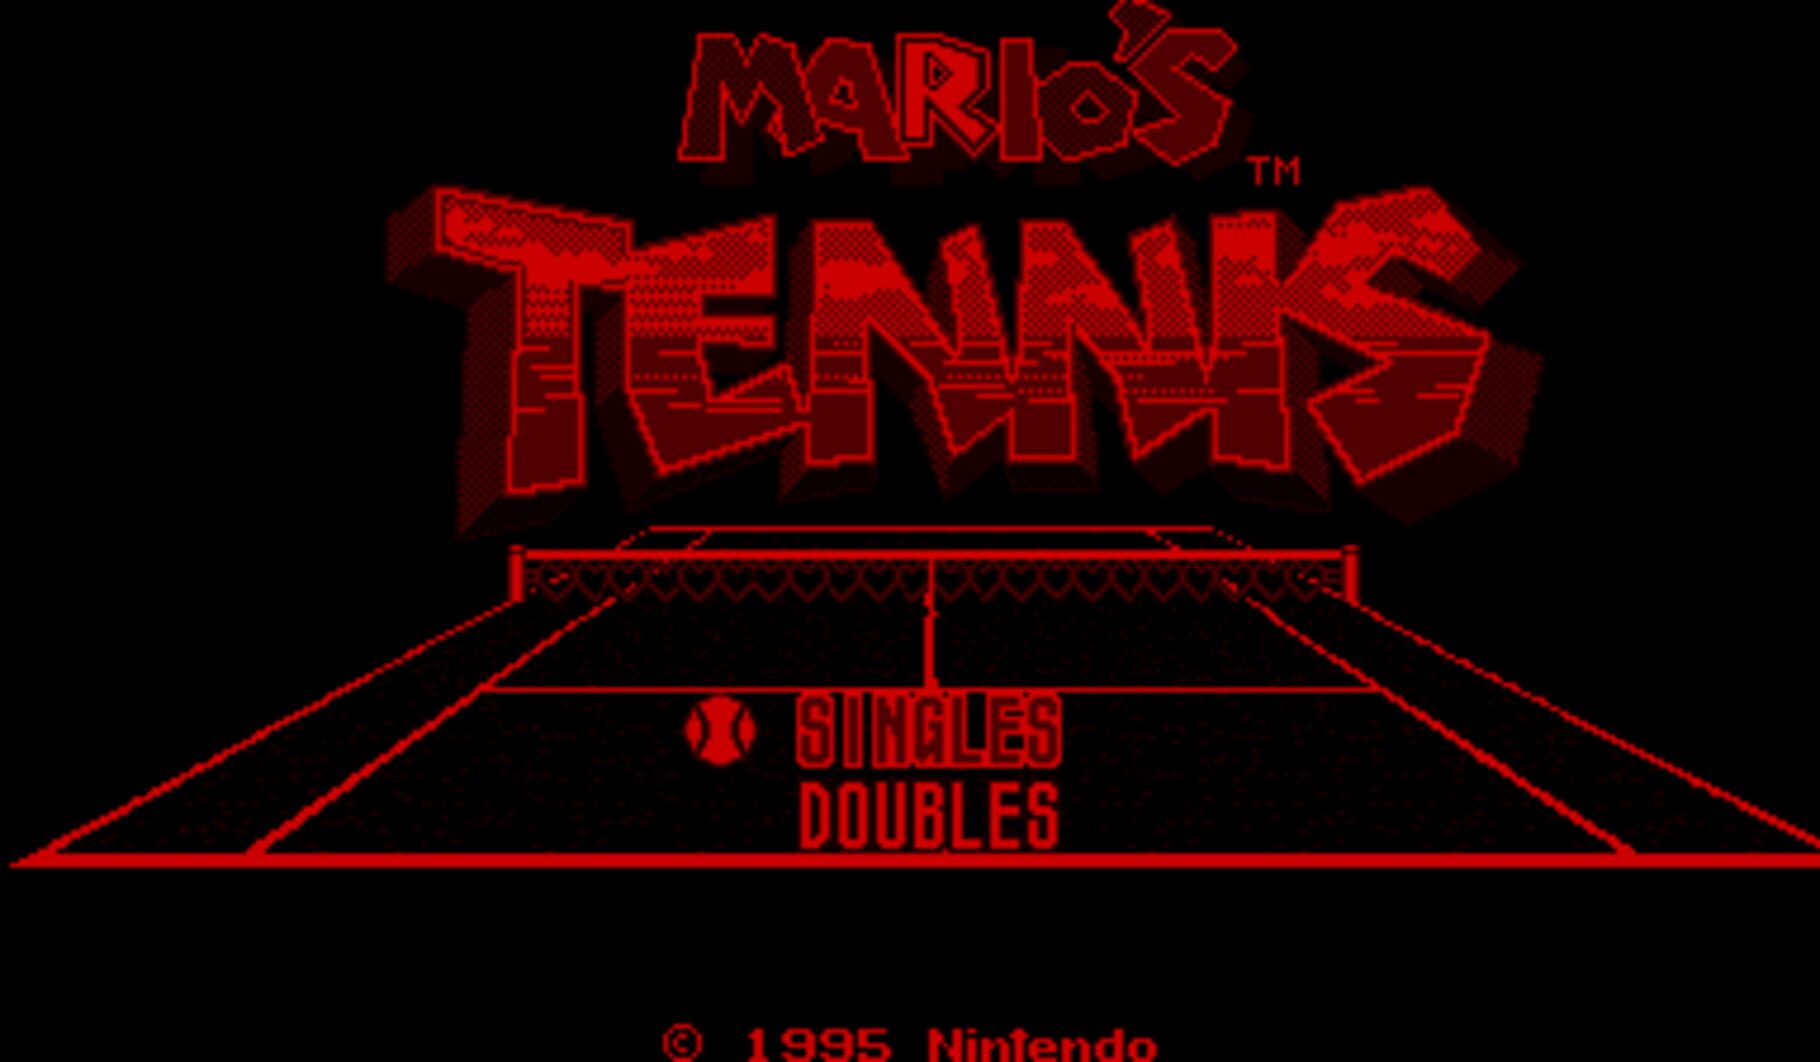 Mario's Tennis